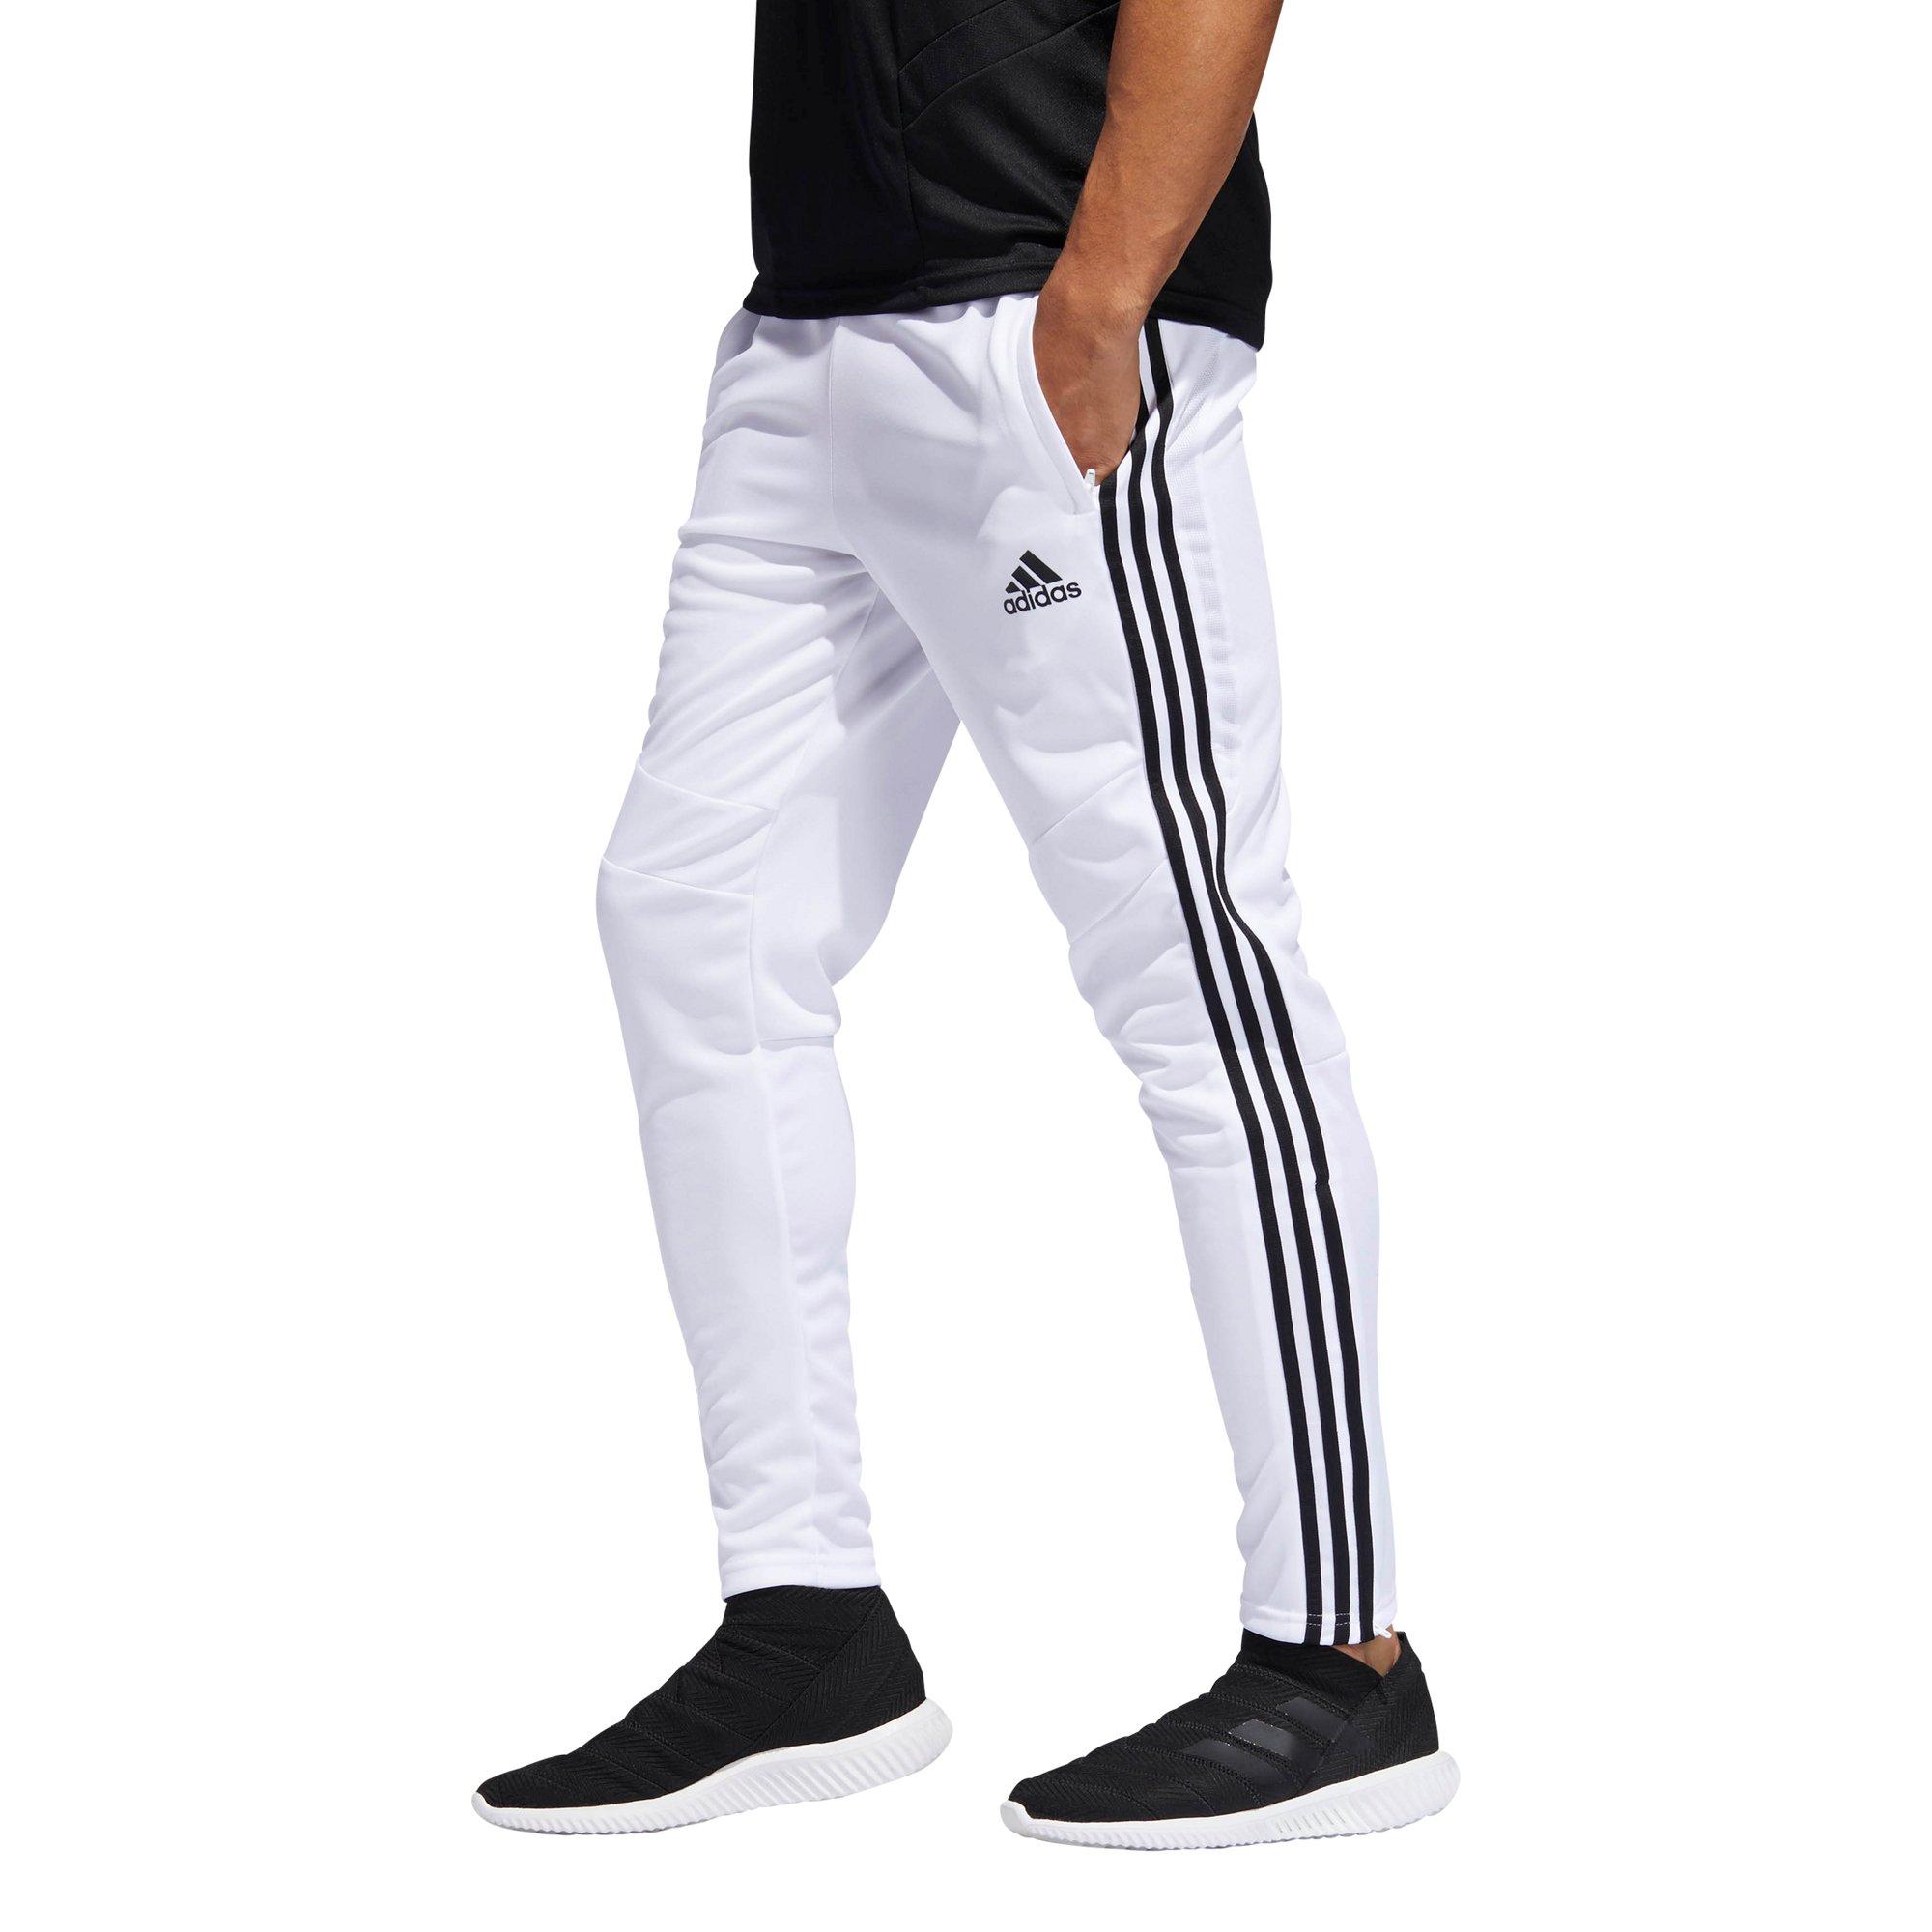 adidas Mens Tiro19 Training Pants Pant Fitness Clothing